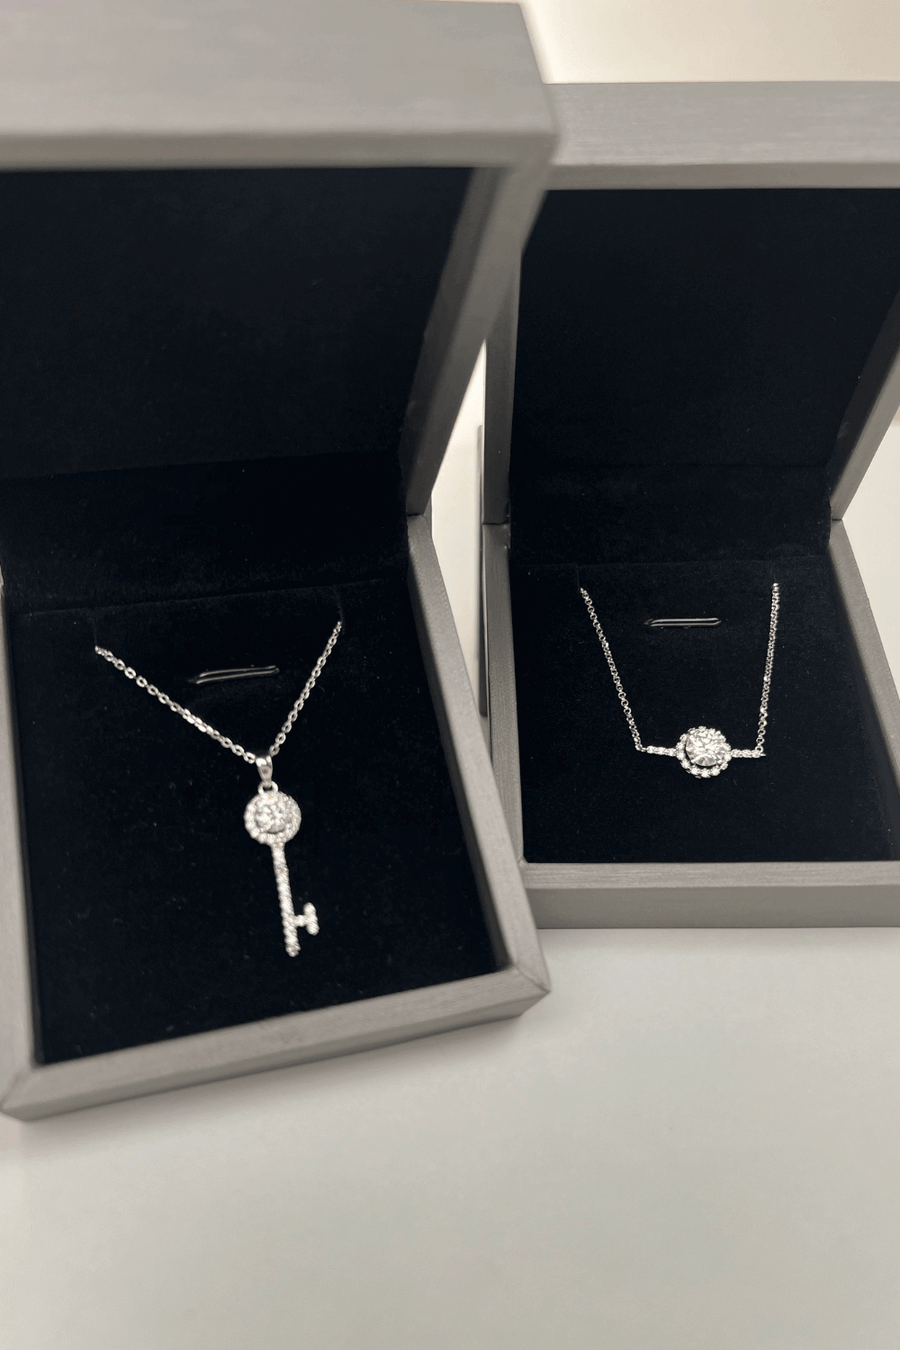 Best Diamond Jewelry Bundle Set Gift | Best Key Chain Diamond Necklace, Earrings Jewelry Gift for Women, Mother, Wife, Daughter | MASON New York